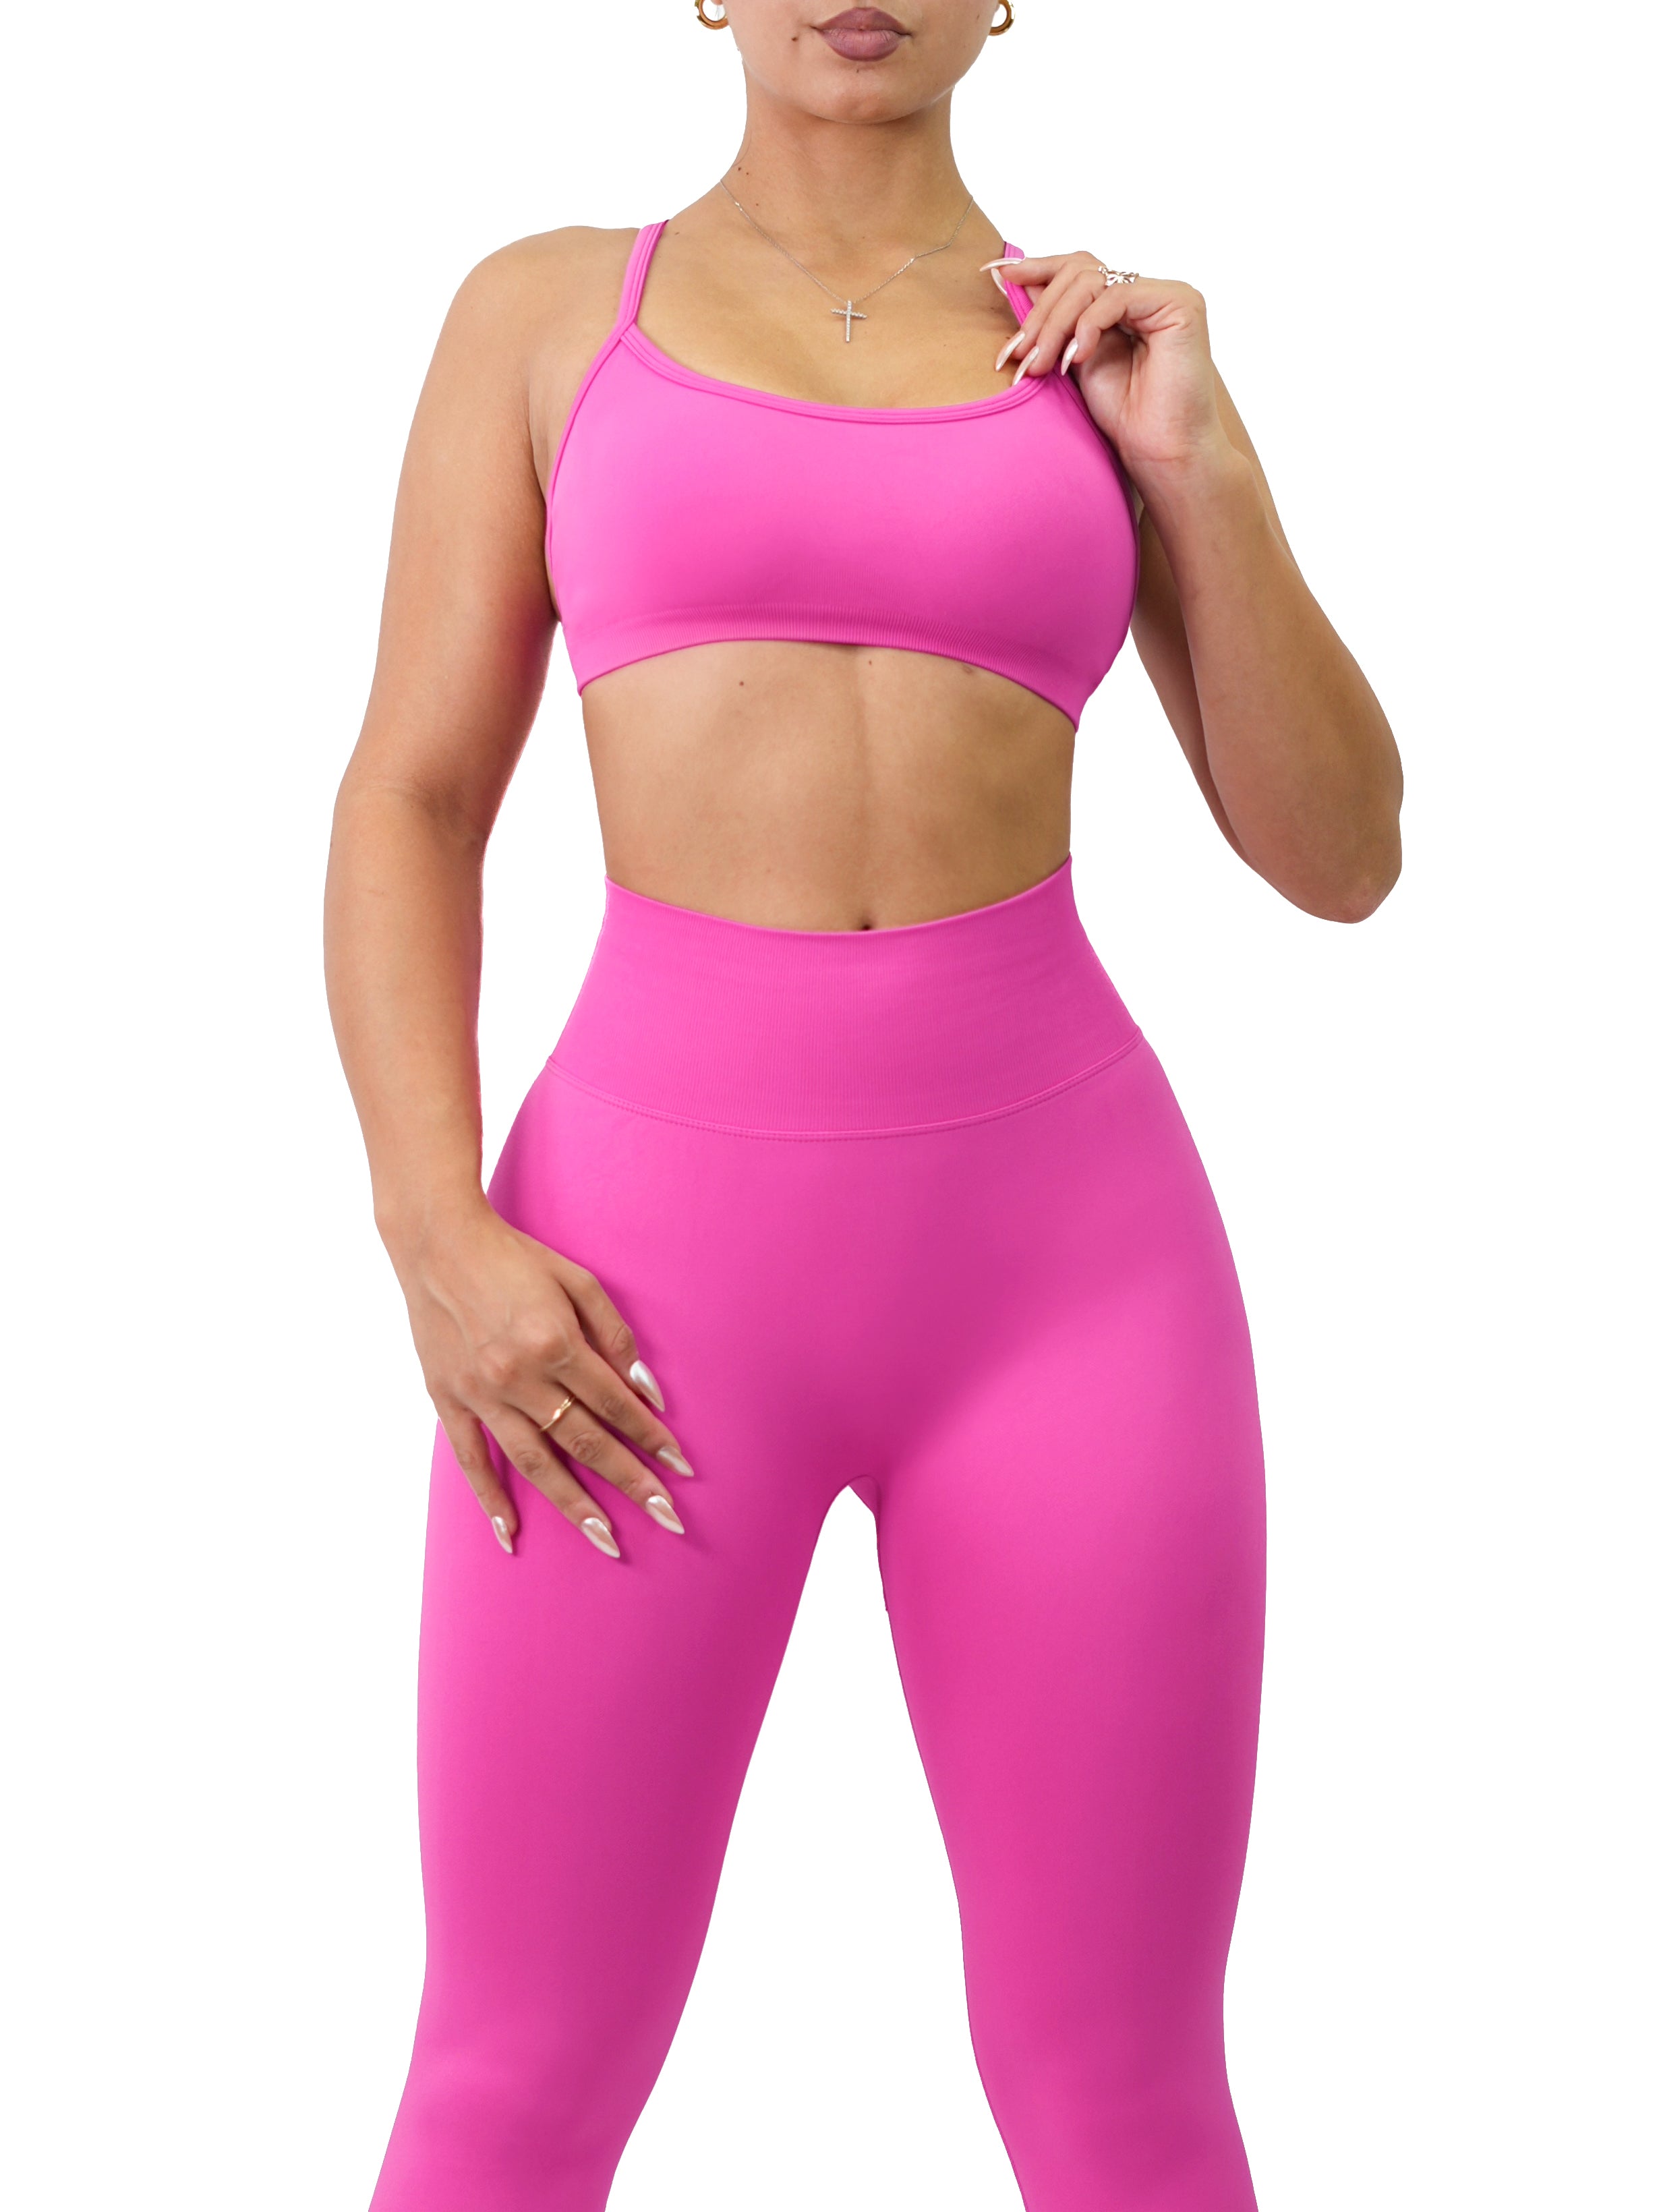 Activewear Bra or Sports Bra. Fuchsia or magenta pink. Unique